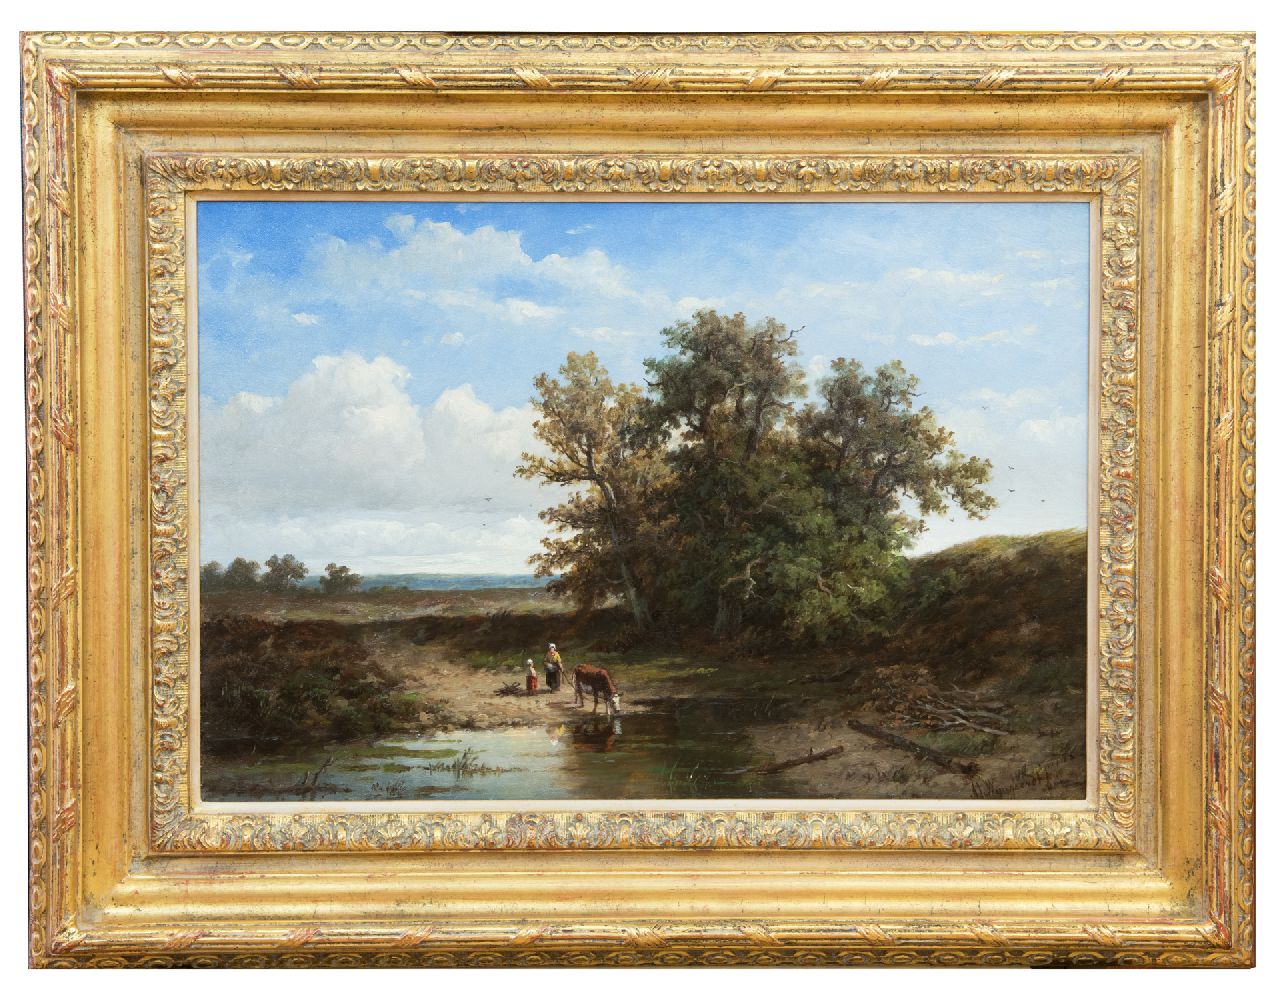 Wijngaerdt A.J. van | Anthonie Jacobus van Wijngaerdt | Paintings offered for sale | Country woman herding a cow, oil on canvas 37.2 x 54.4 cm, signed l.r.